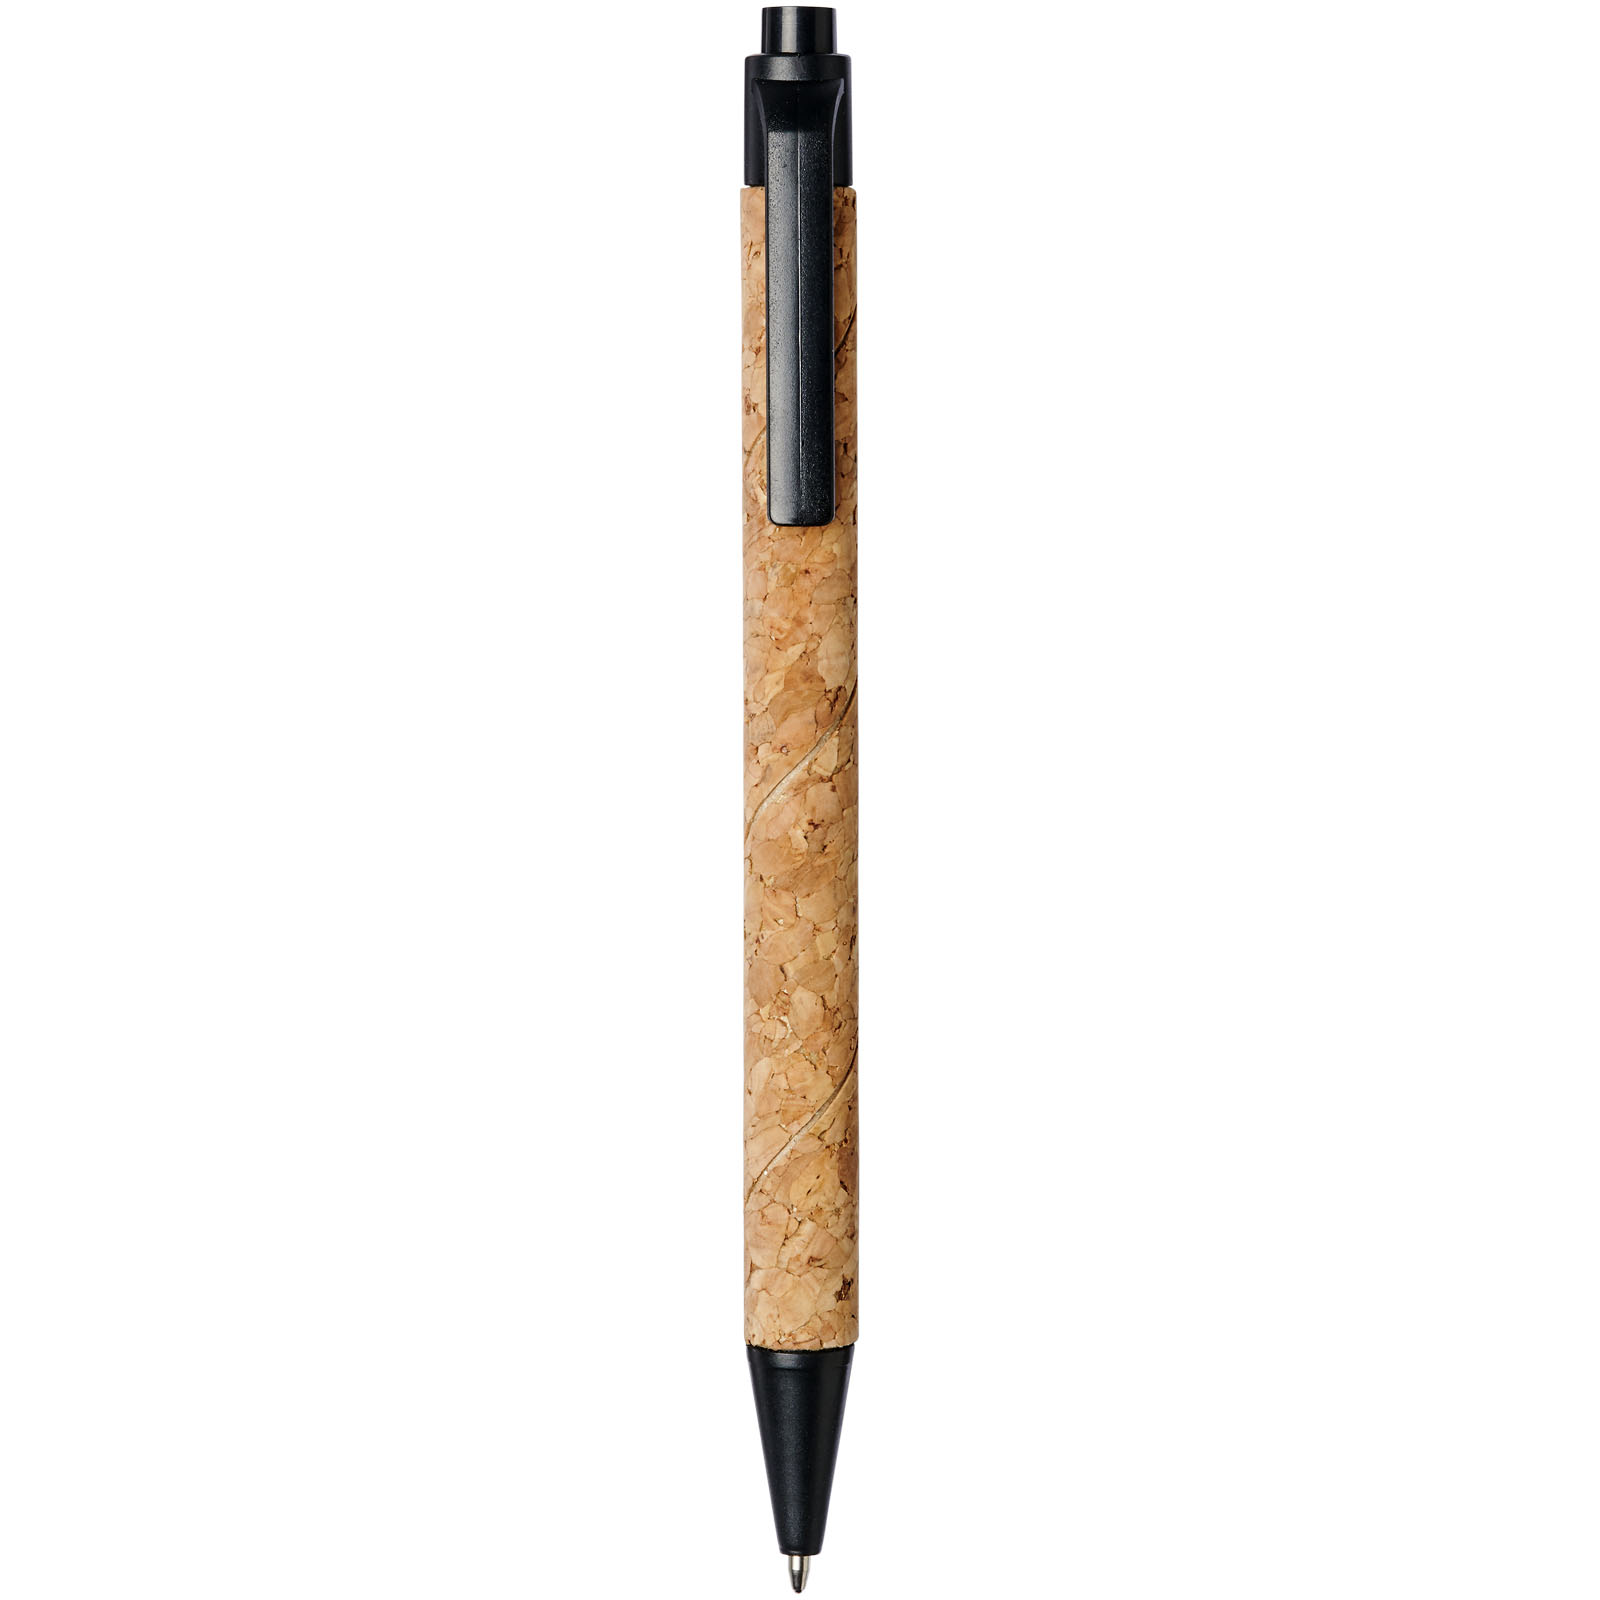 Pens & Writing - Midar cork and wheat straw ballpoint pen